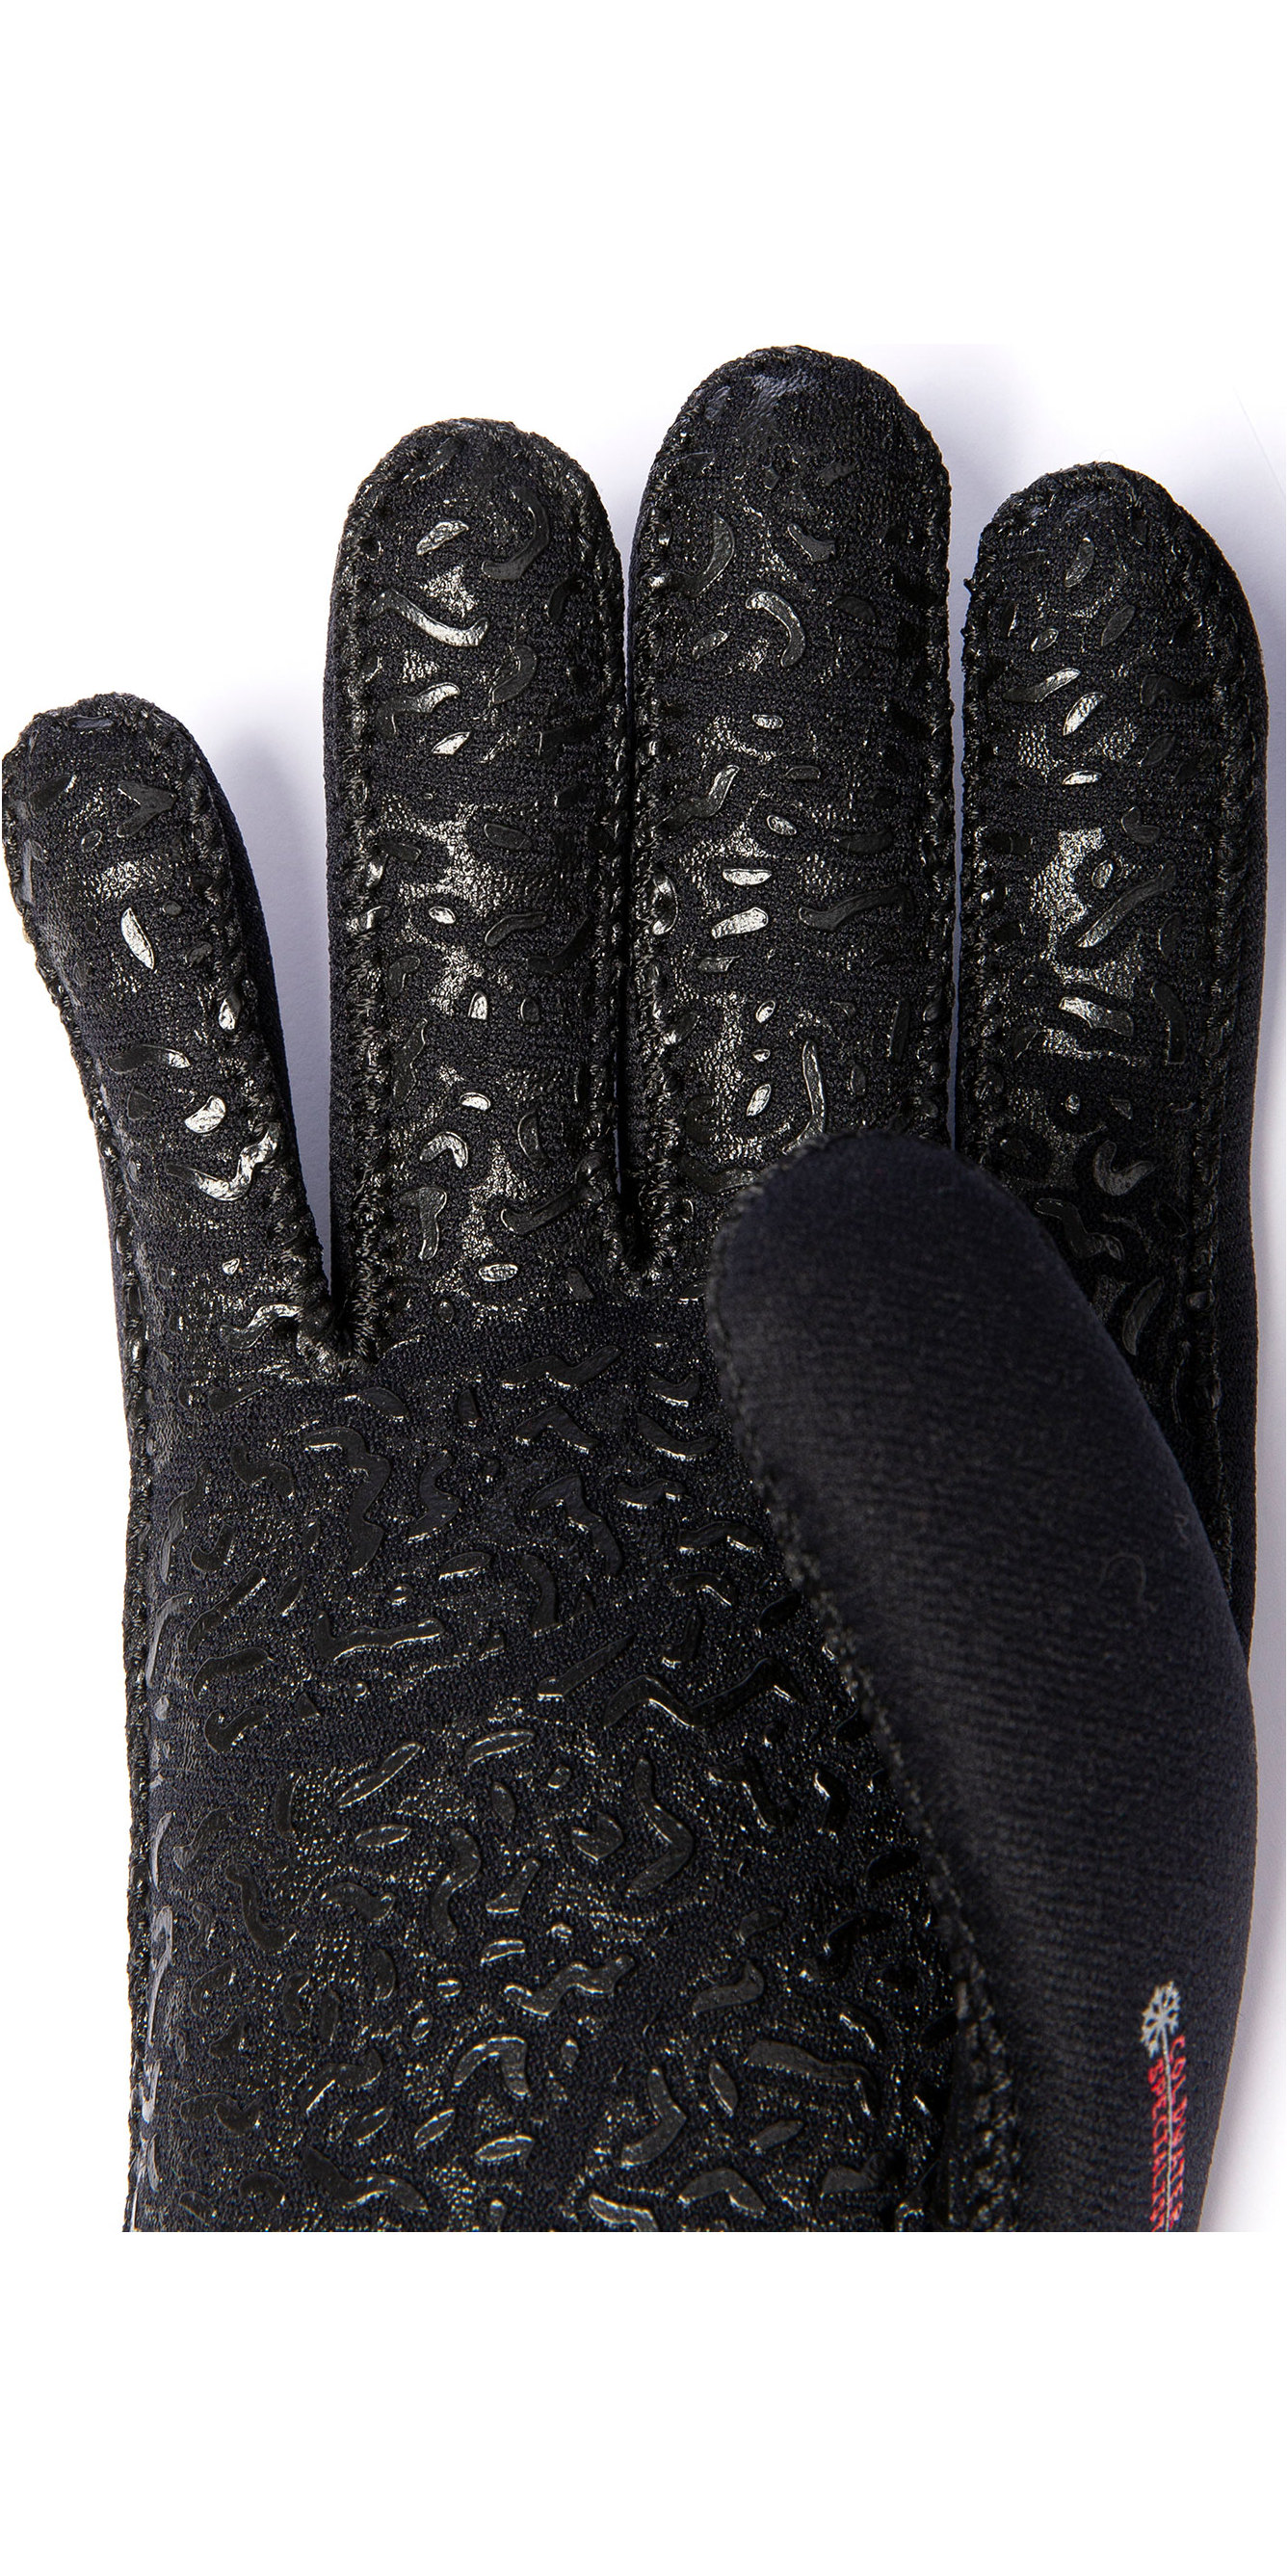 Black Gul Power 3mm Wetsuit Gloves 2020